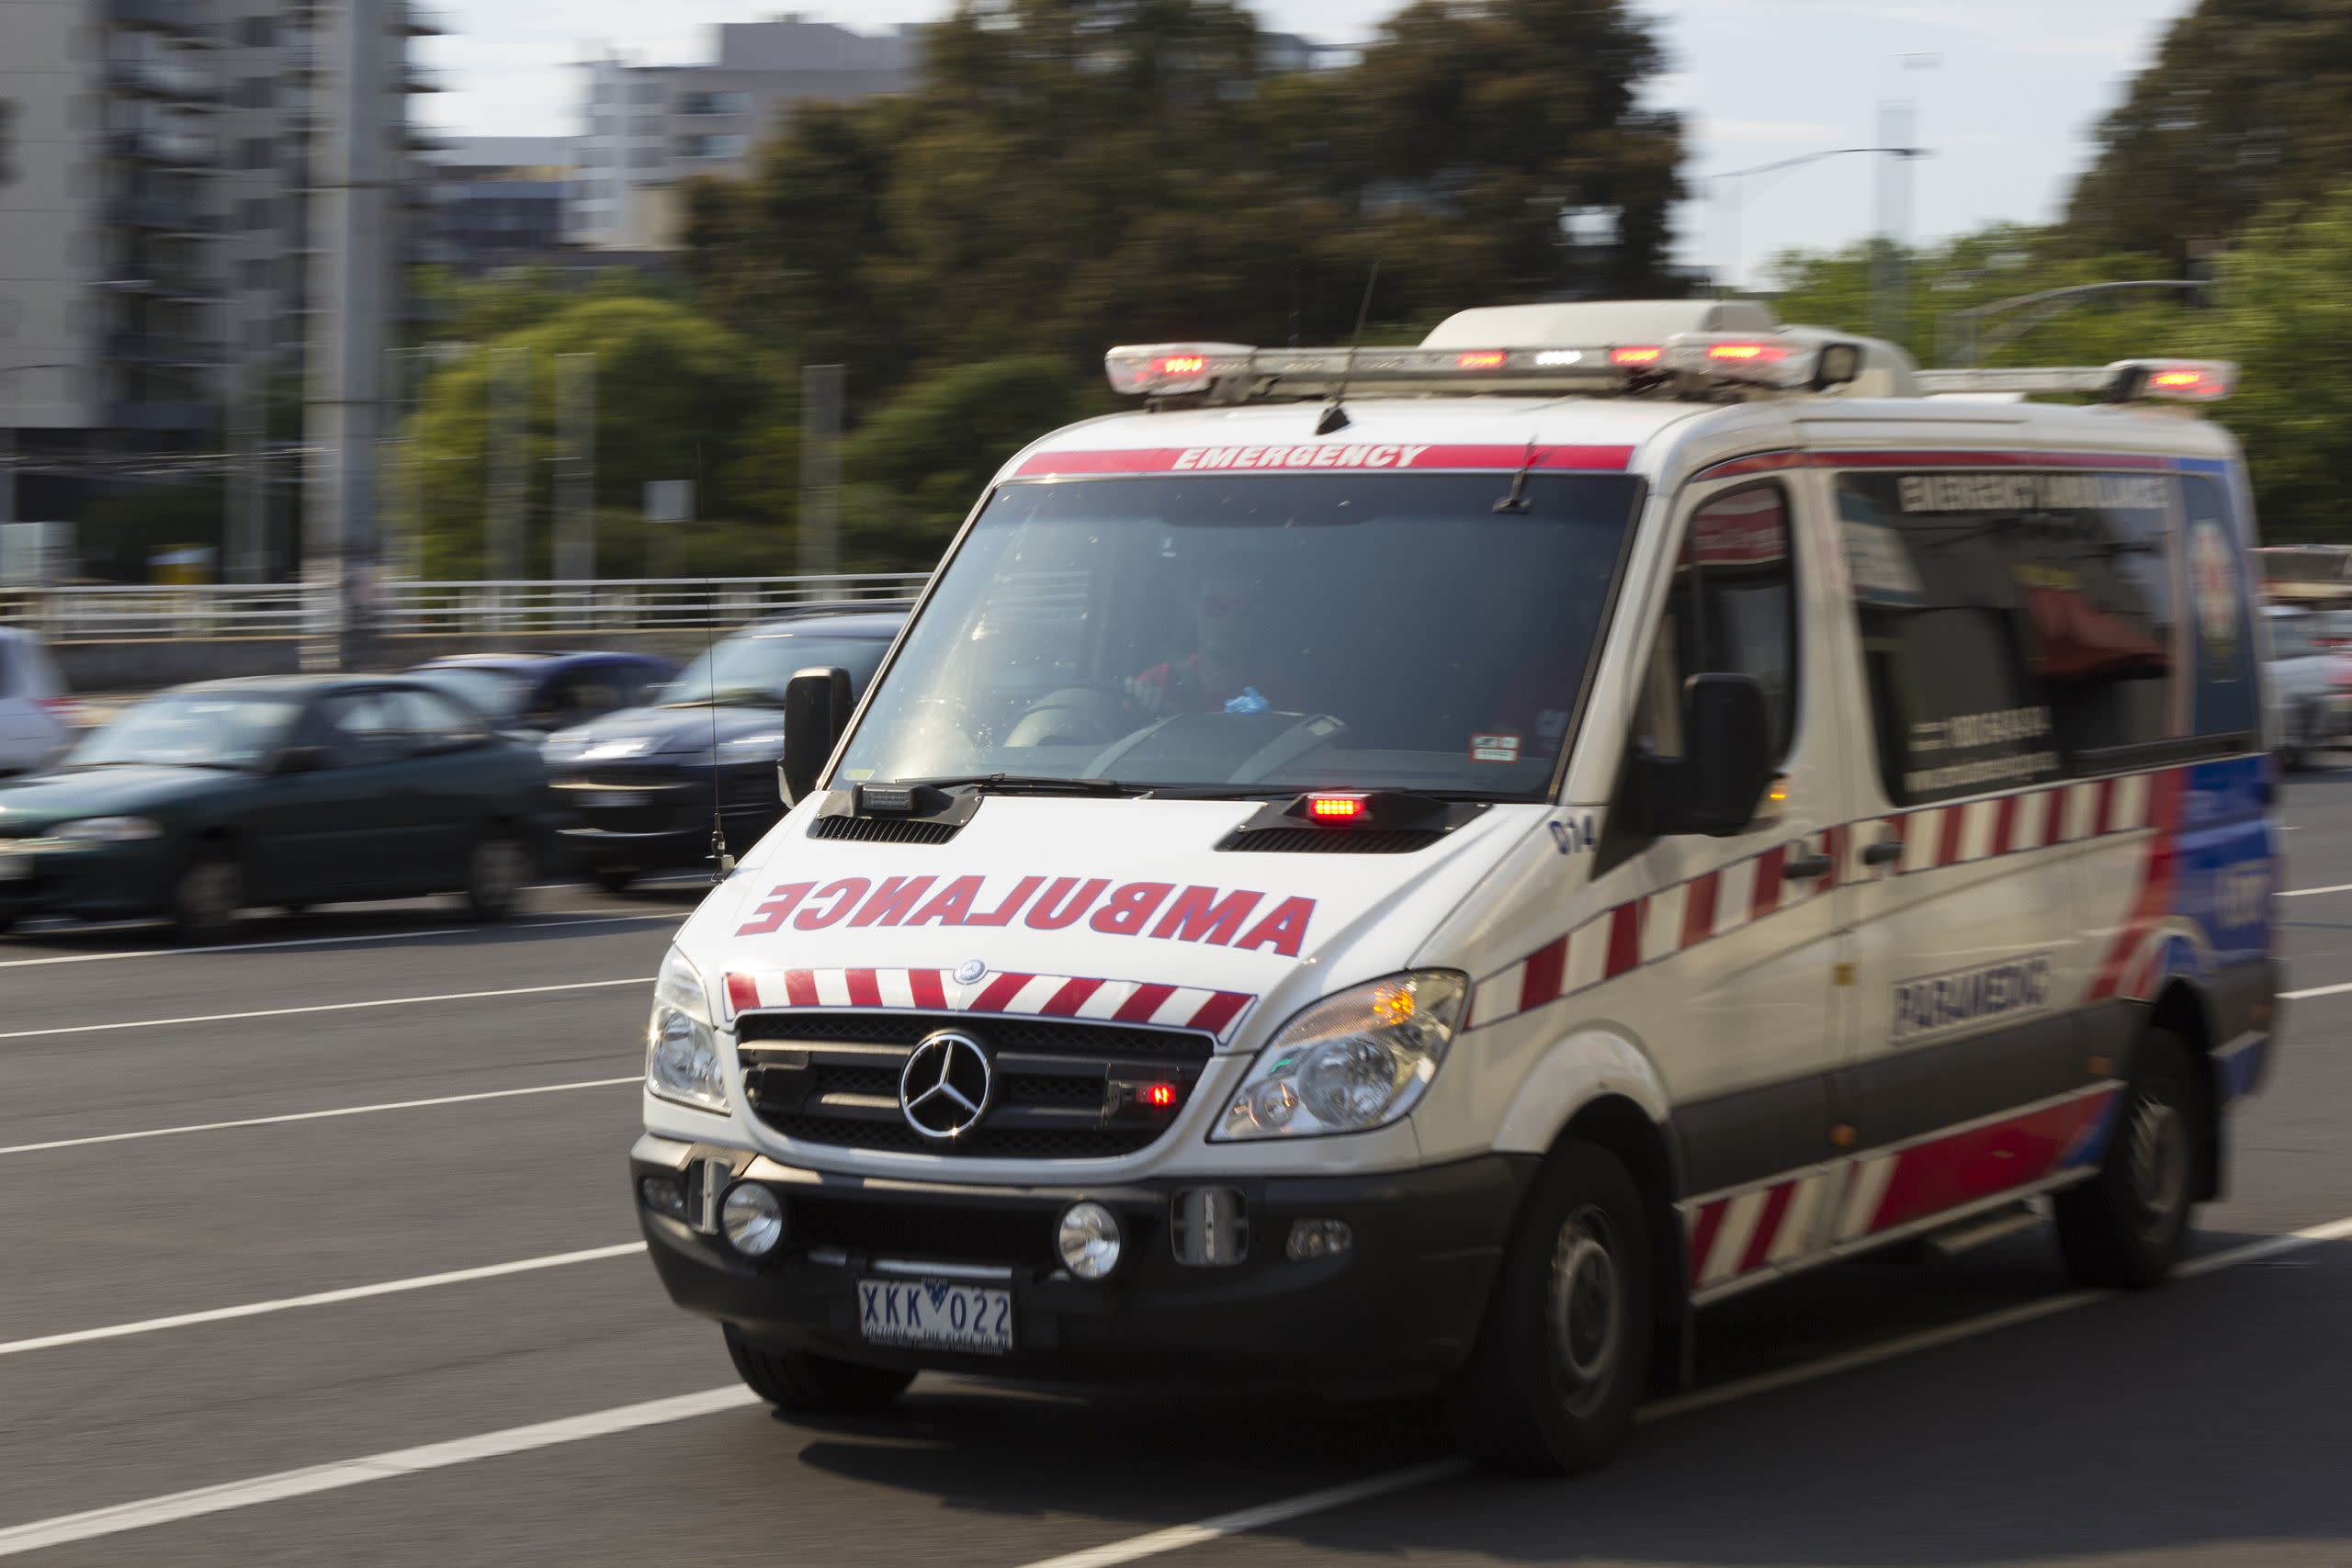 A paramedic ambulance on the move.